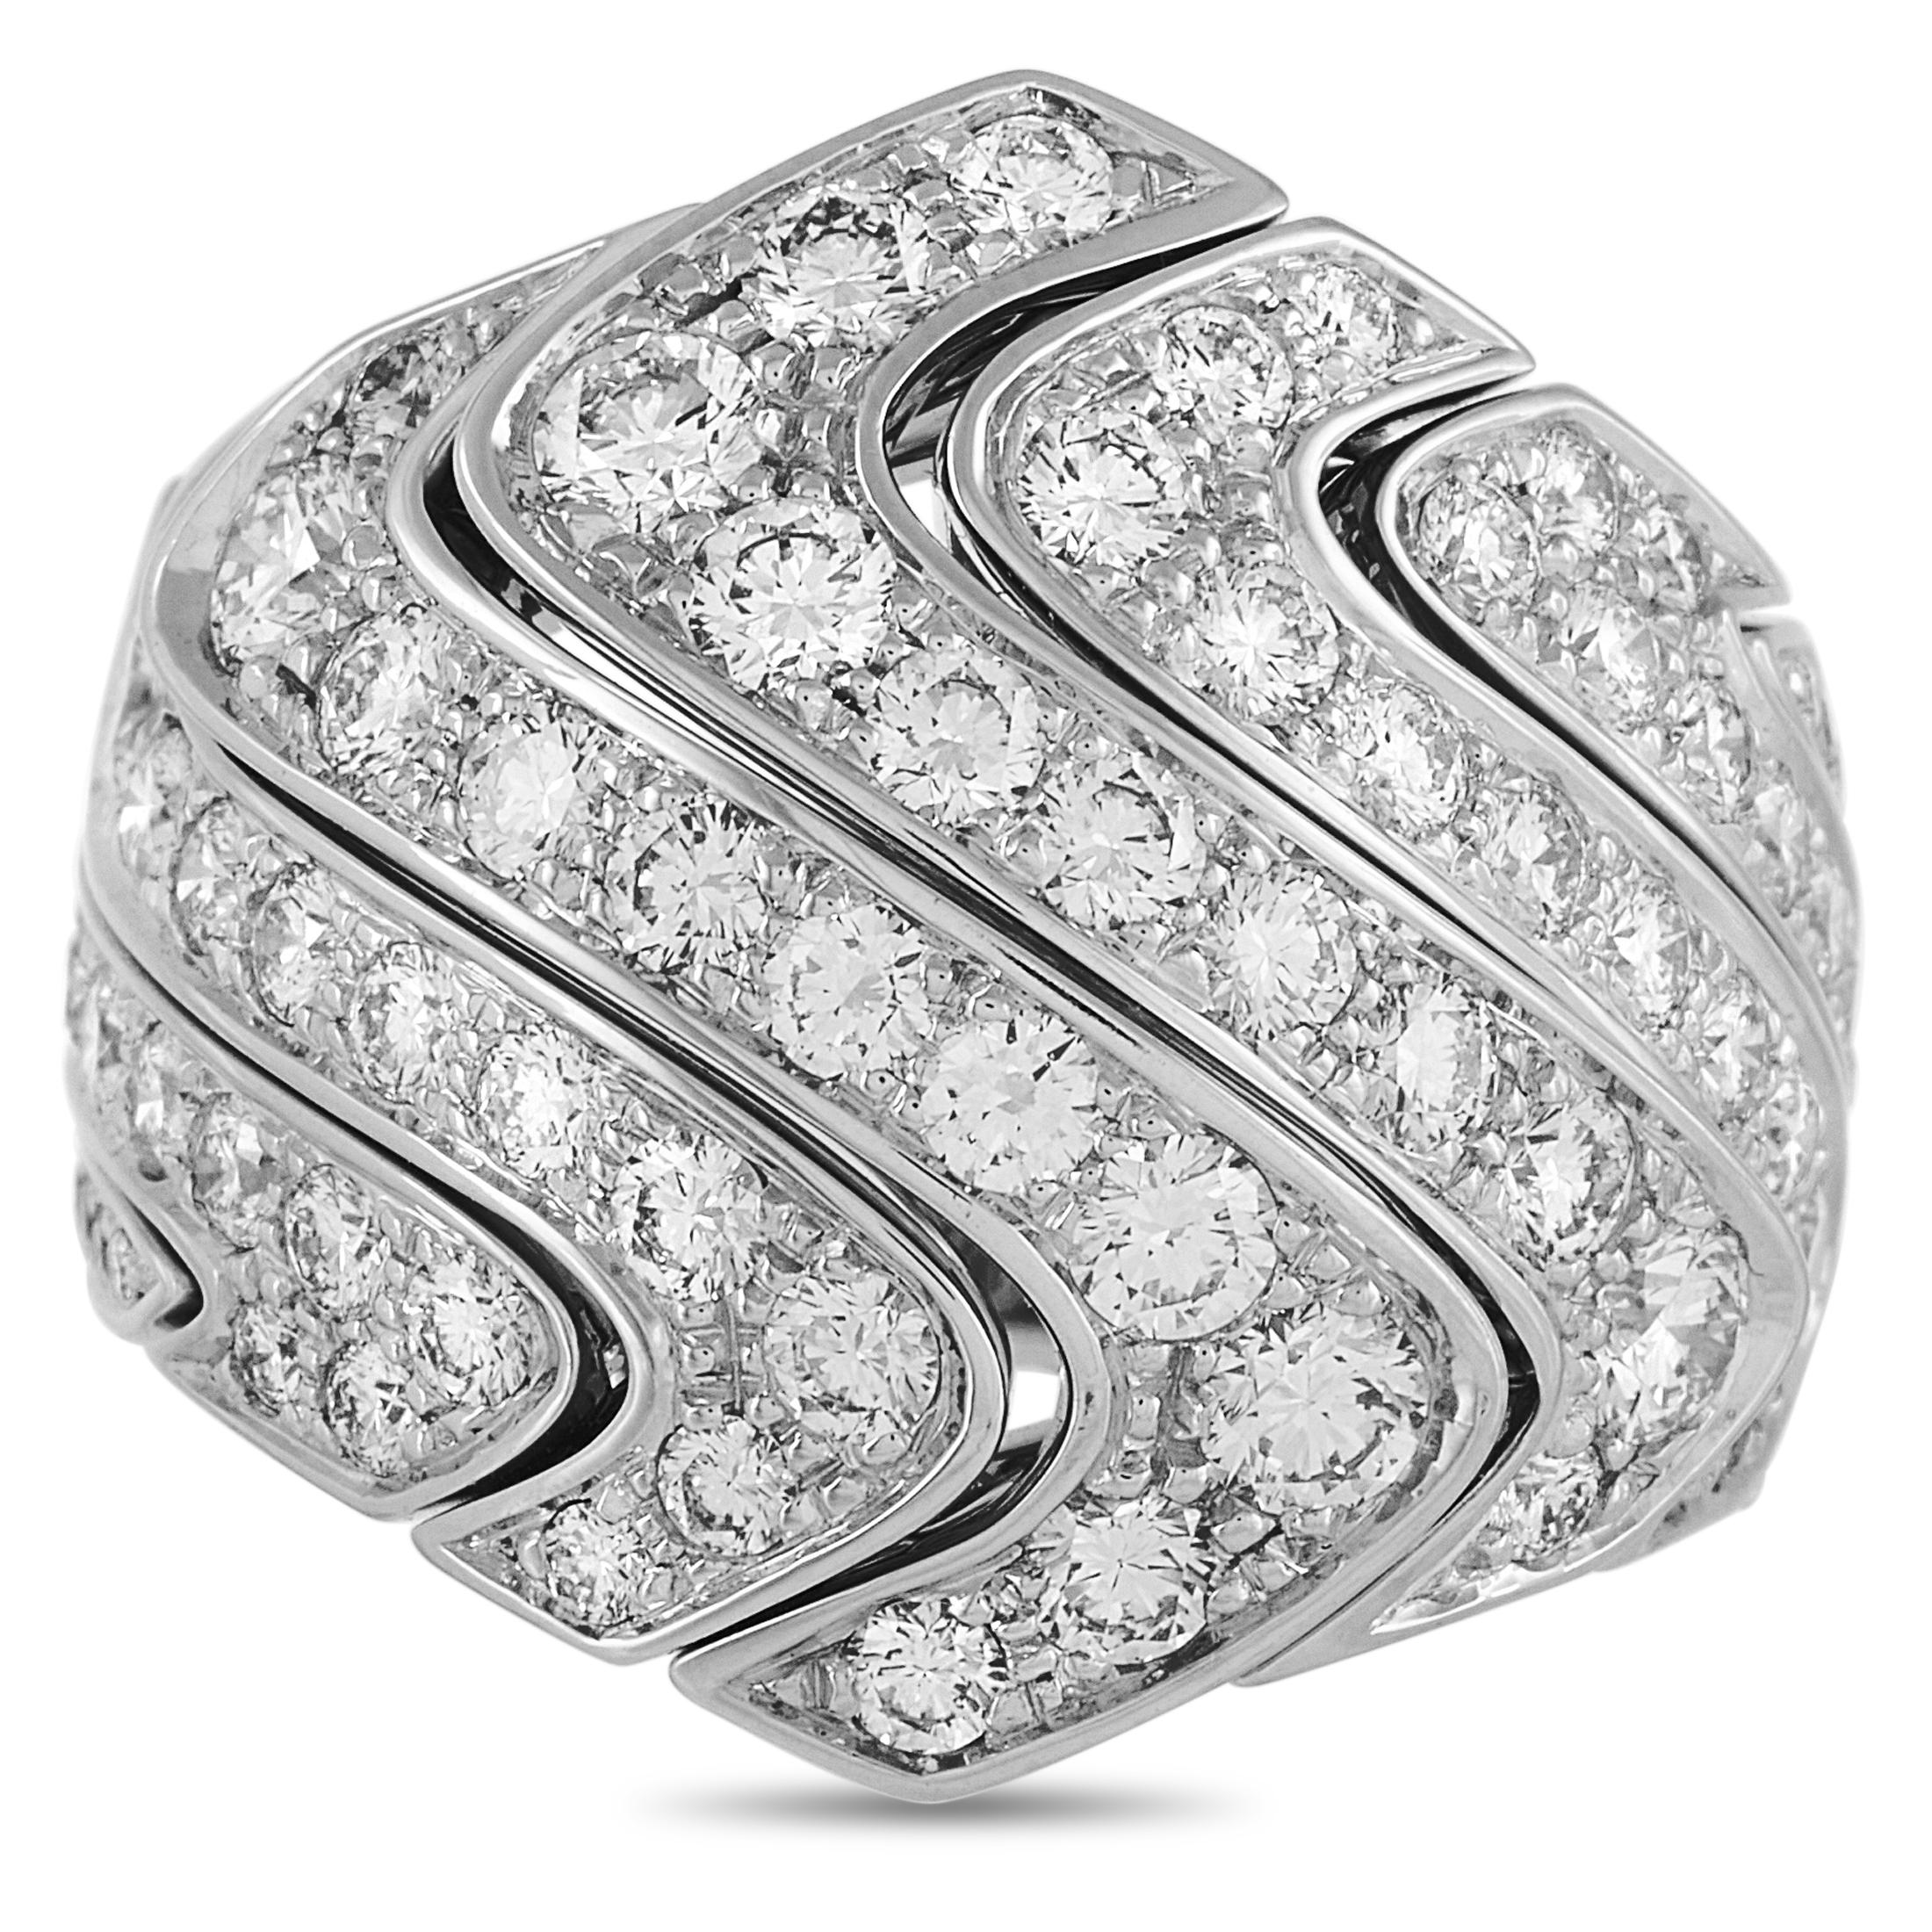 Women's Cartier 18K White Gold, 3.00 Ct Diamond Ring